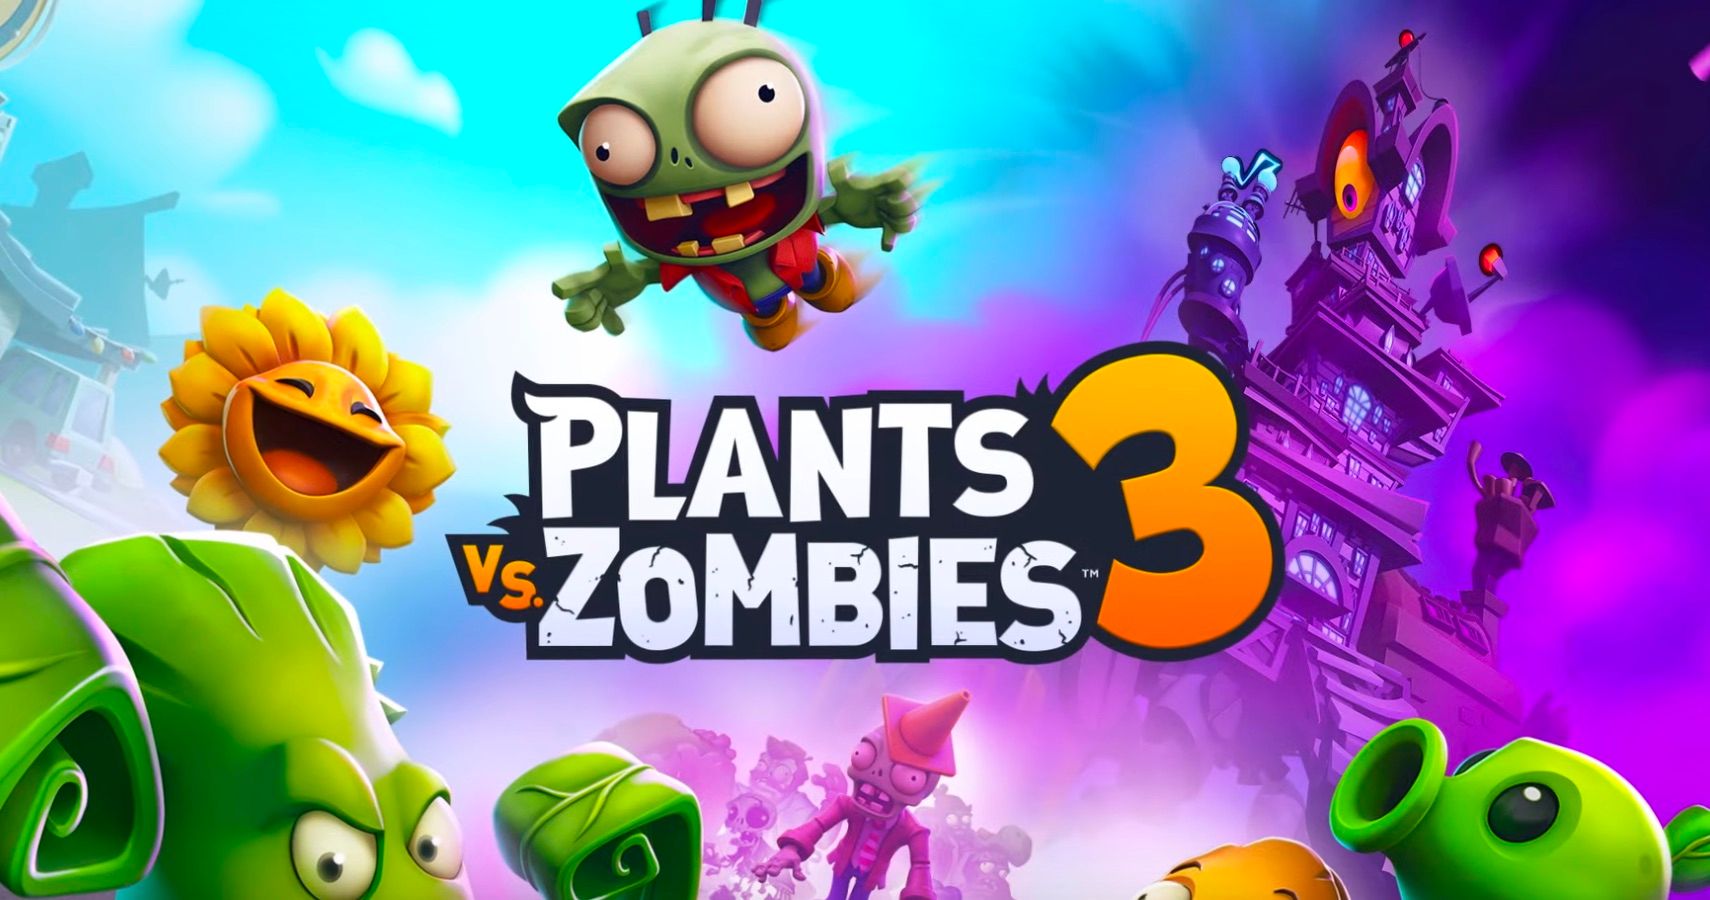 play plants vs zombies 3 online